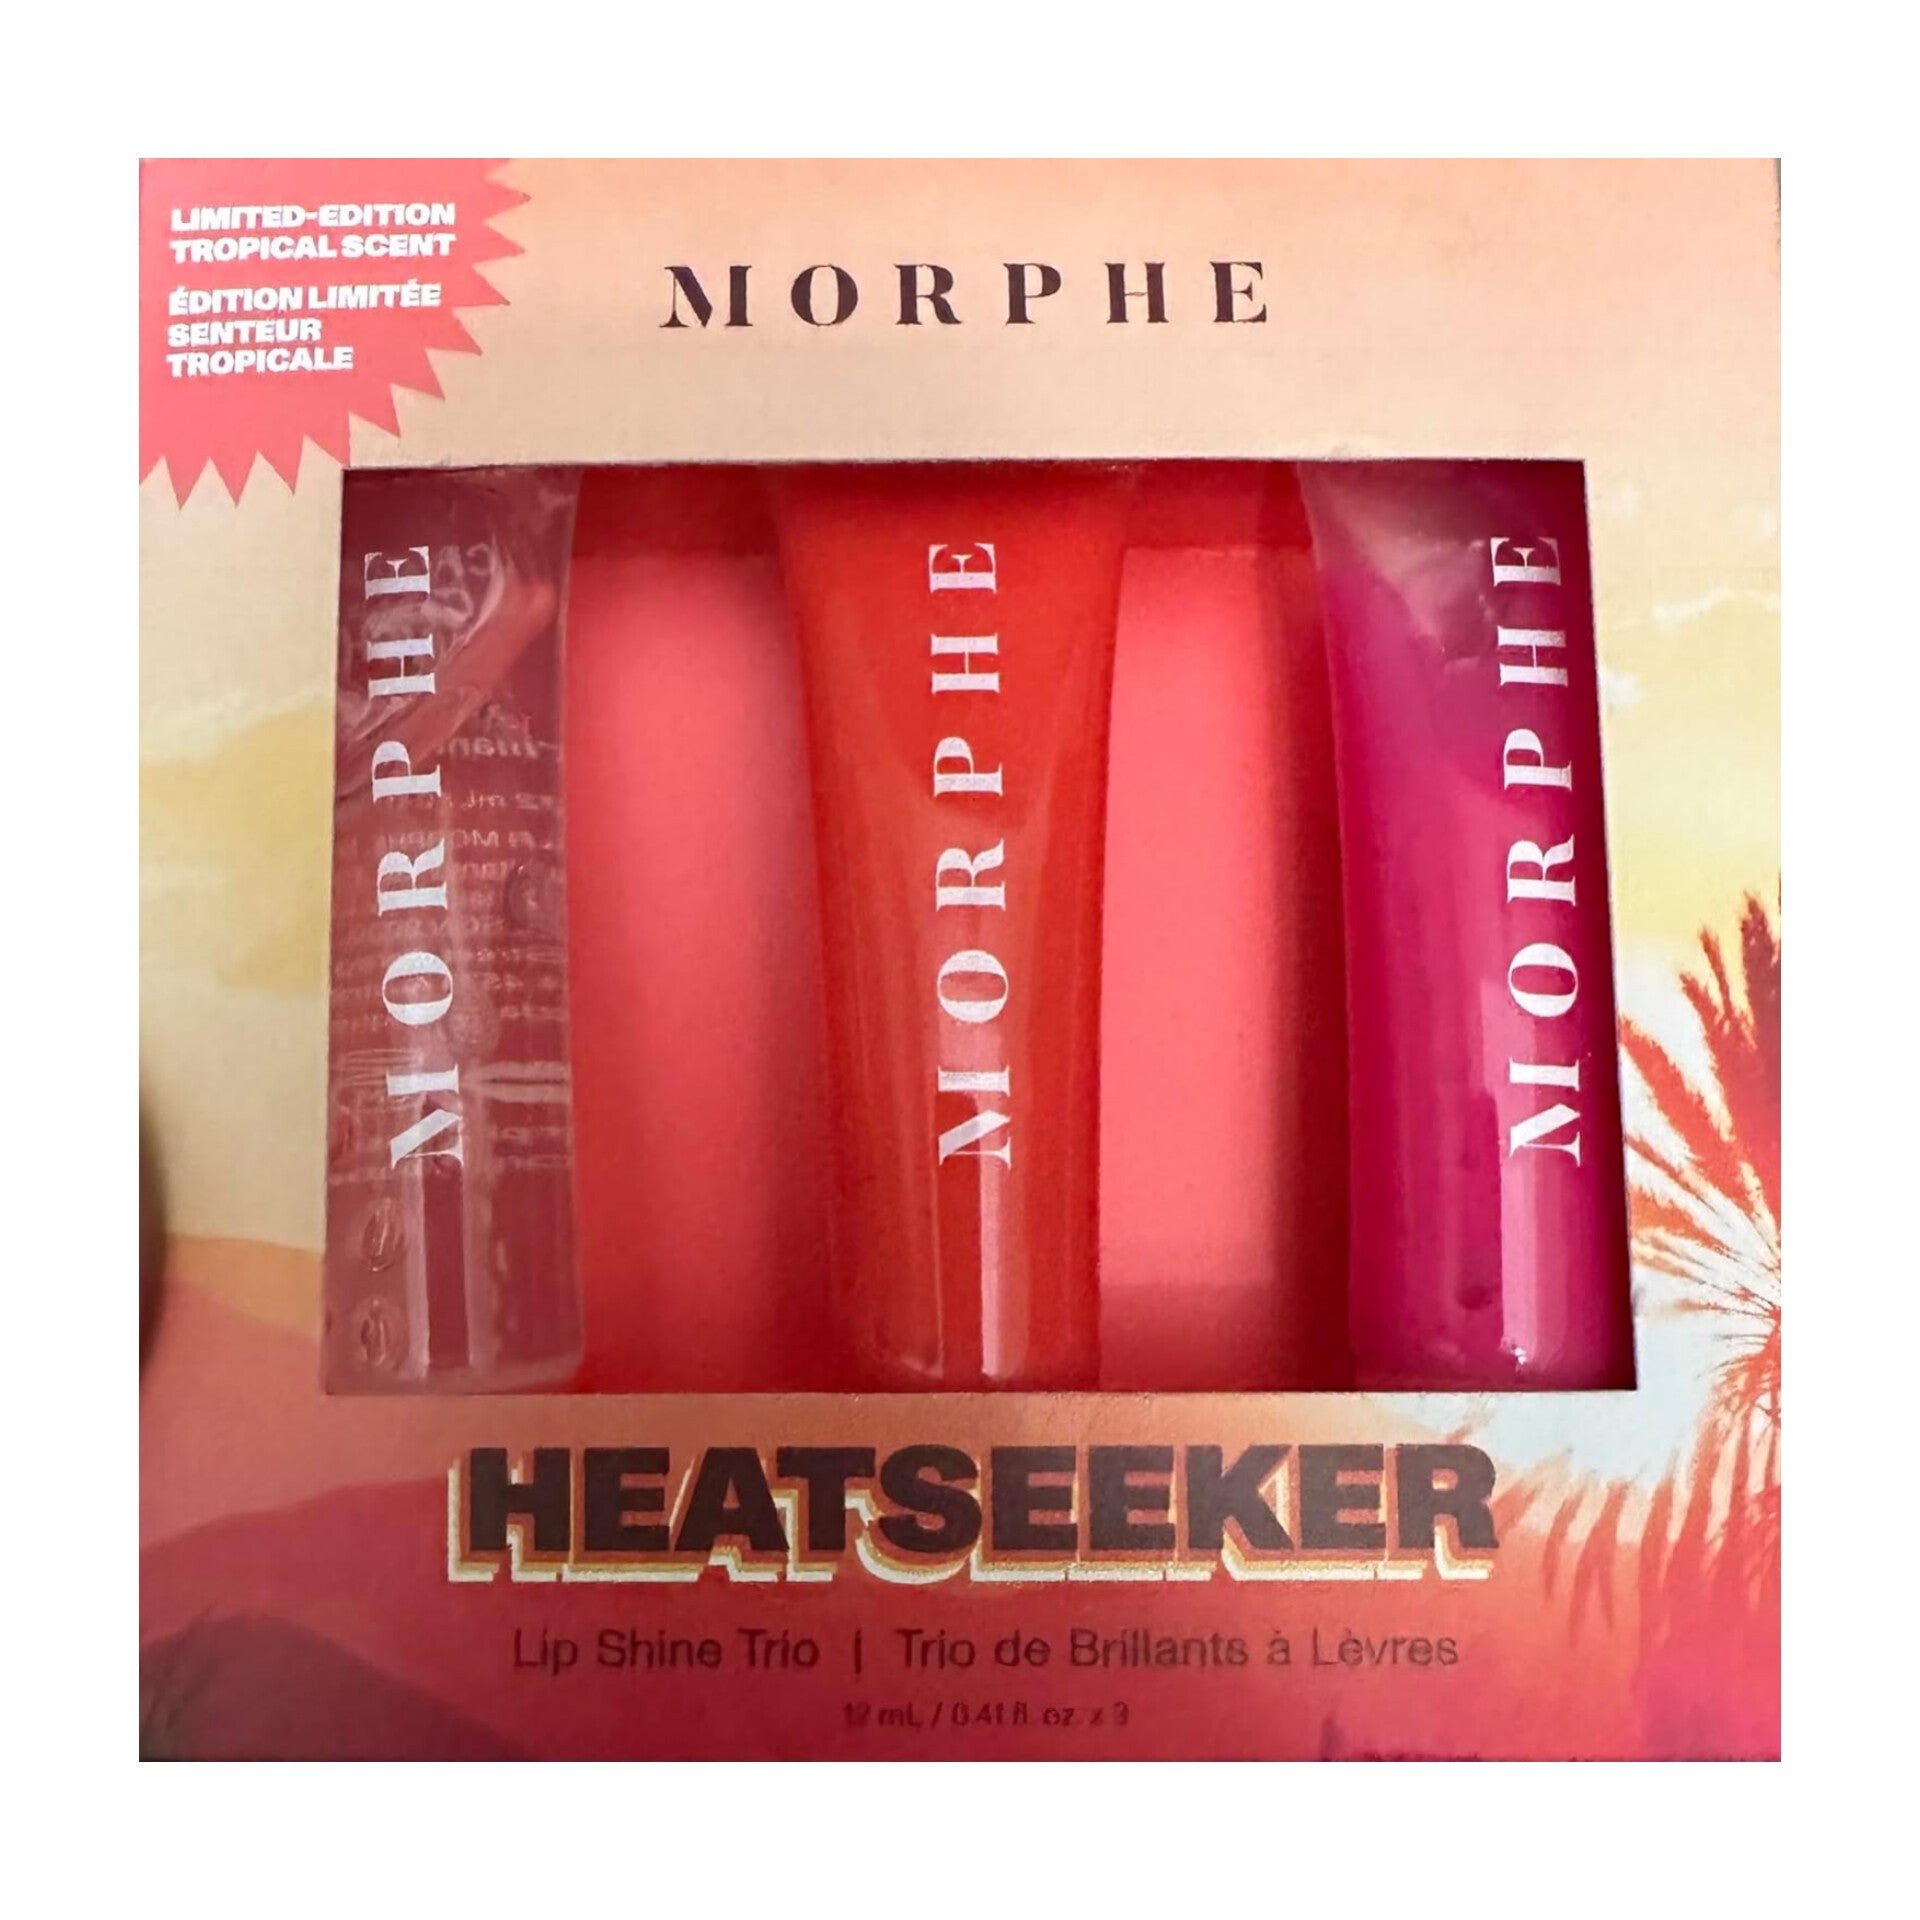 morphe-heatseeker-lip-shine-trio-limited-edition